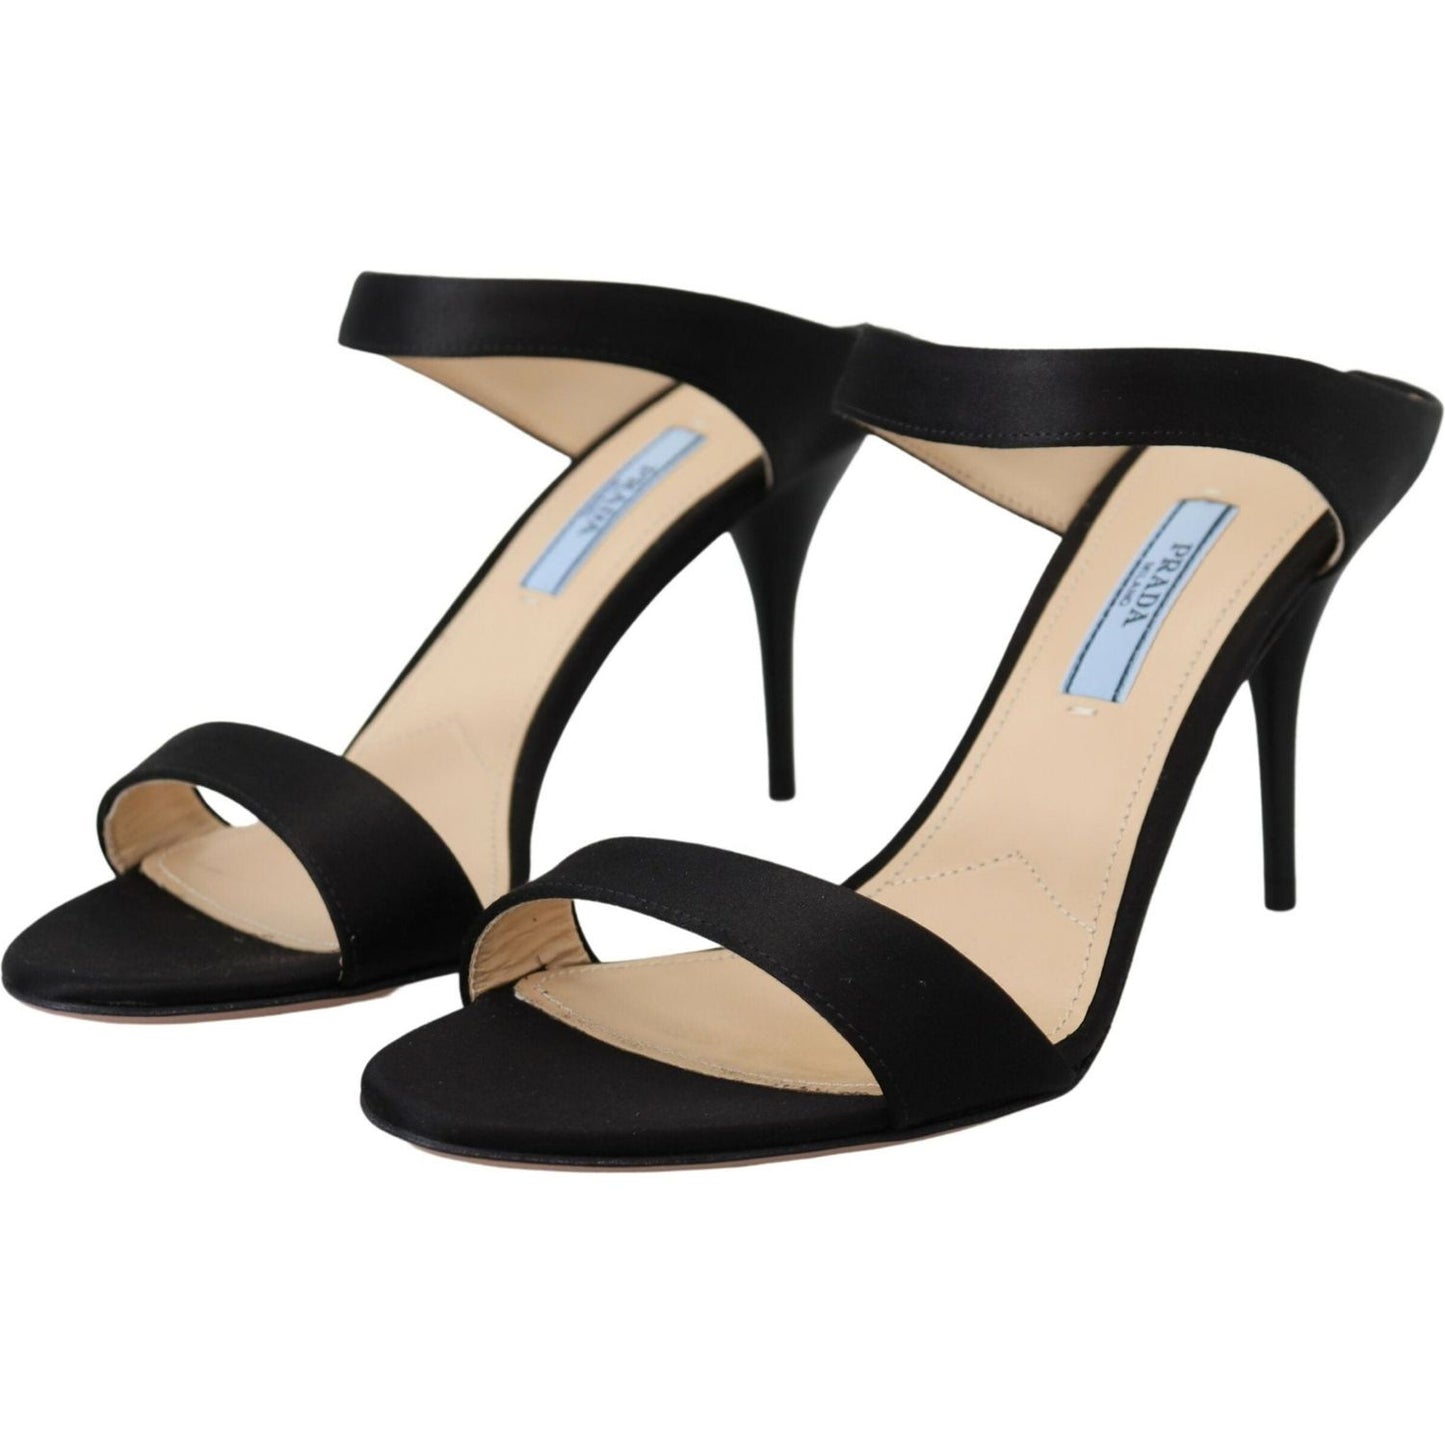 Prada Elegant Black Leather Heels Pumps black-leather-sandals-stiletto-heels-open-toe-shoes